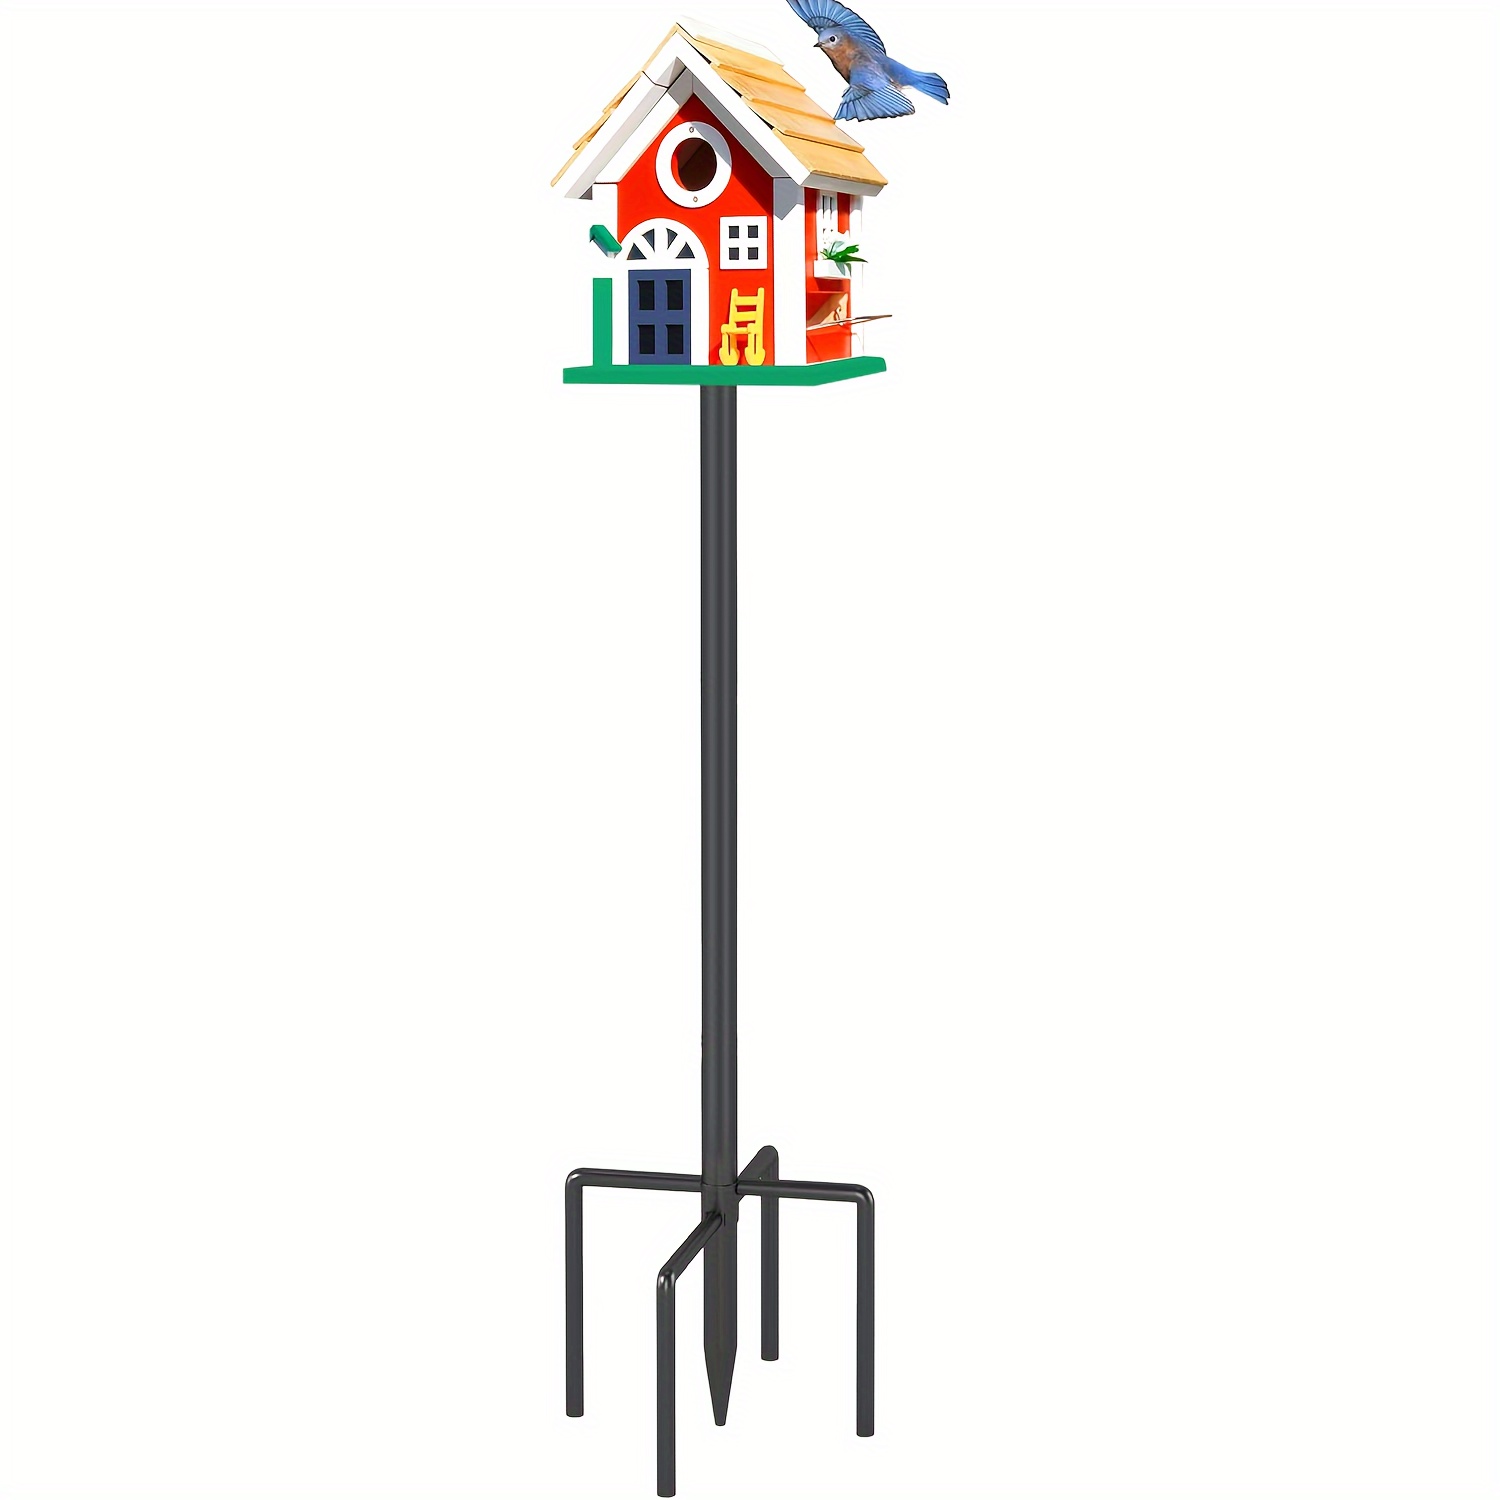 

Outdoor Birdhouse Pole, 108"/274cm Heavy Duty Bird Feeder Pole With 5-prong Base, Adjustable Birder Mounting Pole, Birdhouse Pole, Bird Feeder Stand For Watching Wild Birds (without Birdhouse)